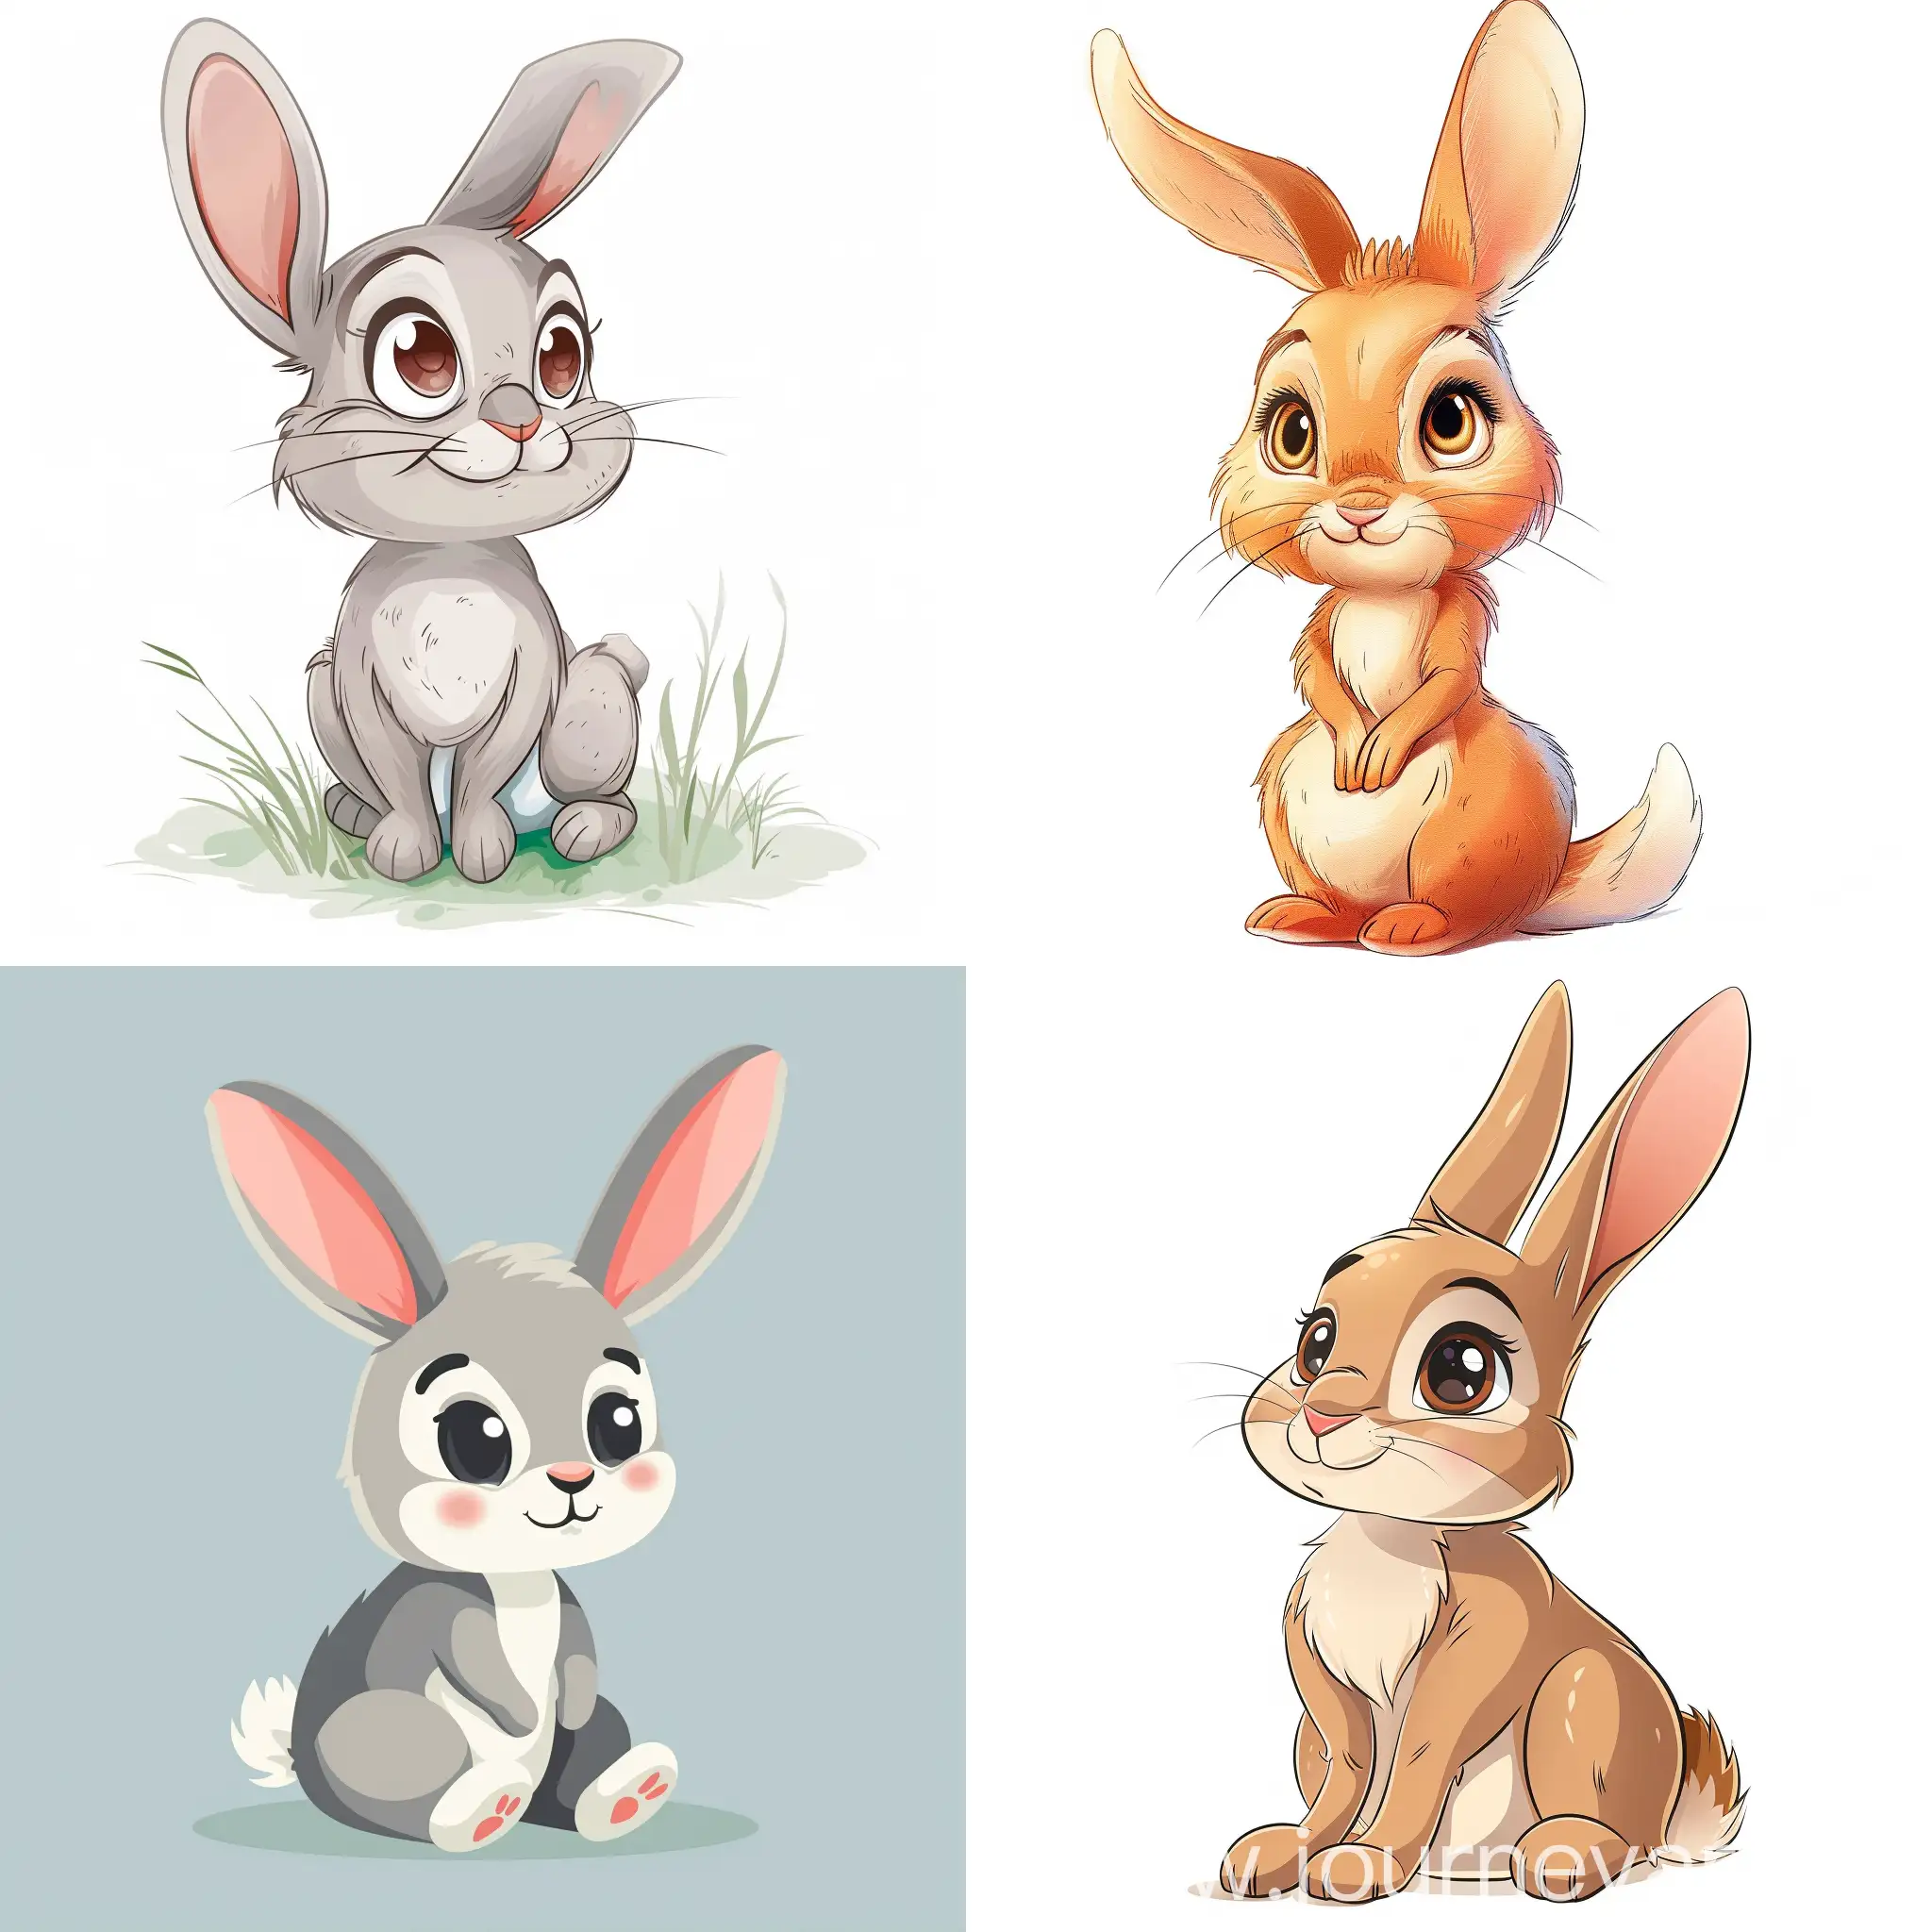 Adorable-Cartoon-Rabbit-Character-Illustration